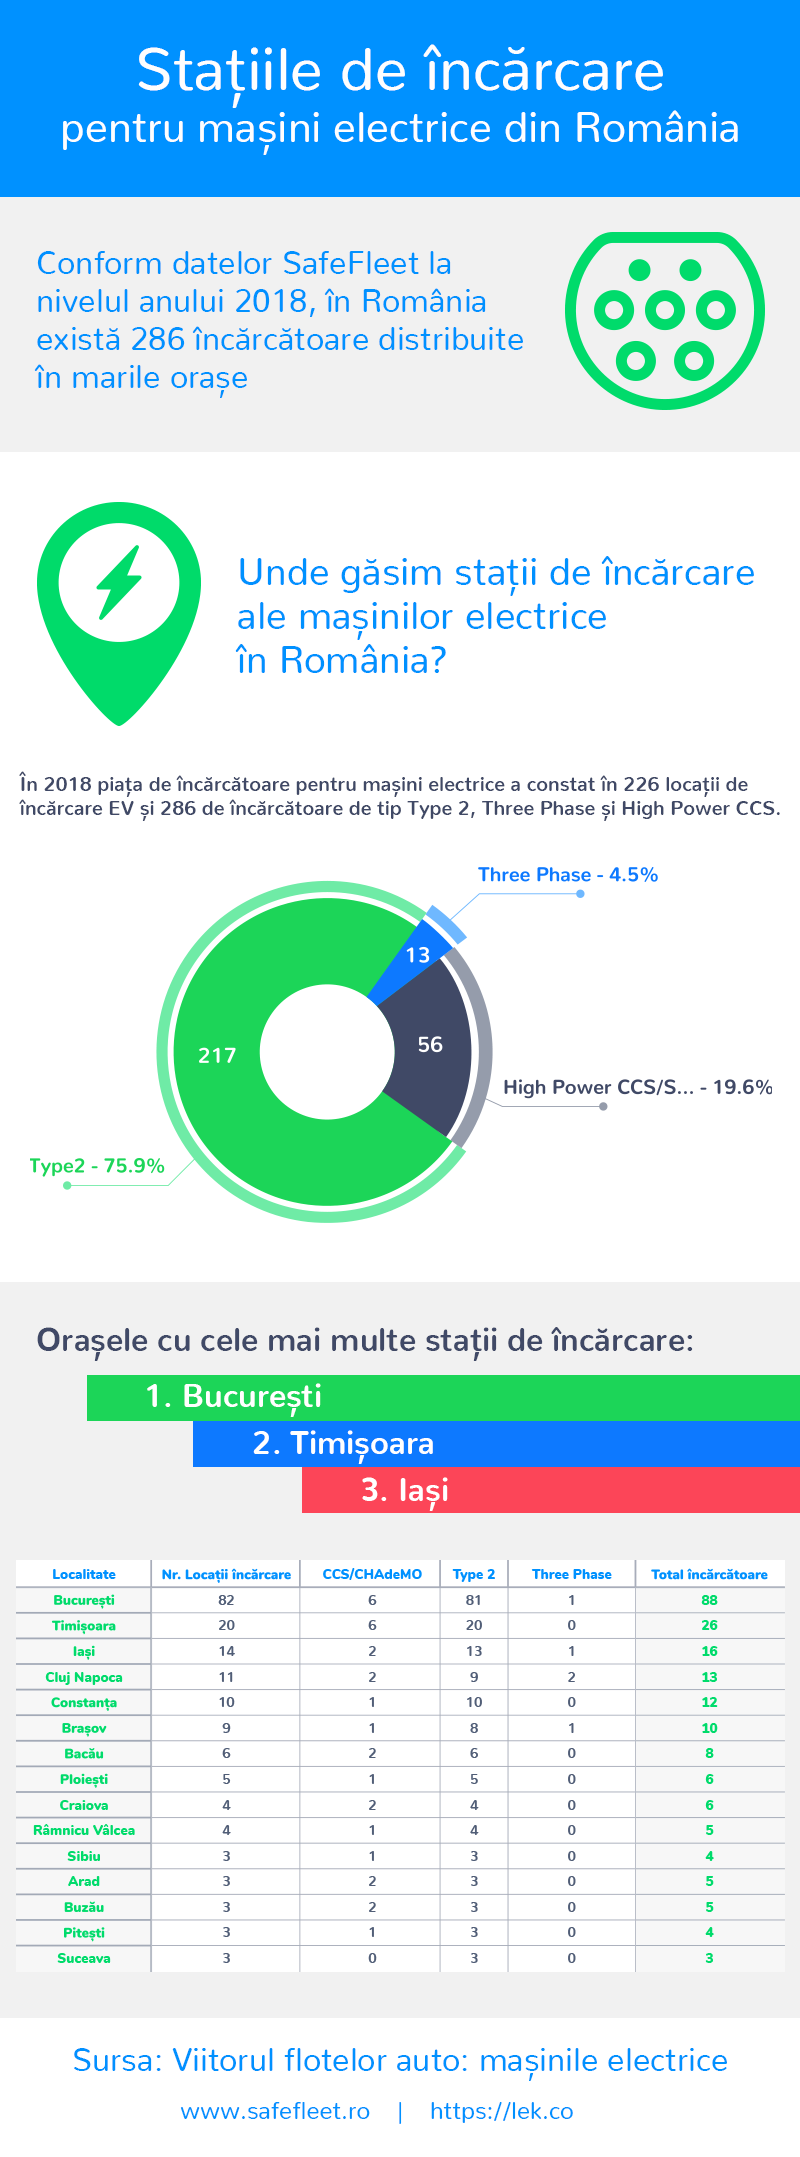 infografic_lek3.co_statii_incarcare_romania_RO_v2_22042019